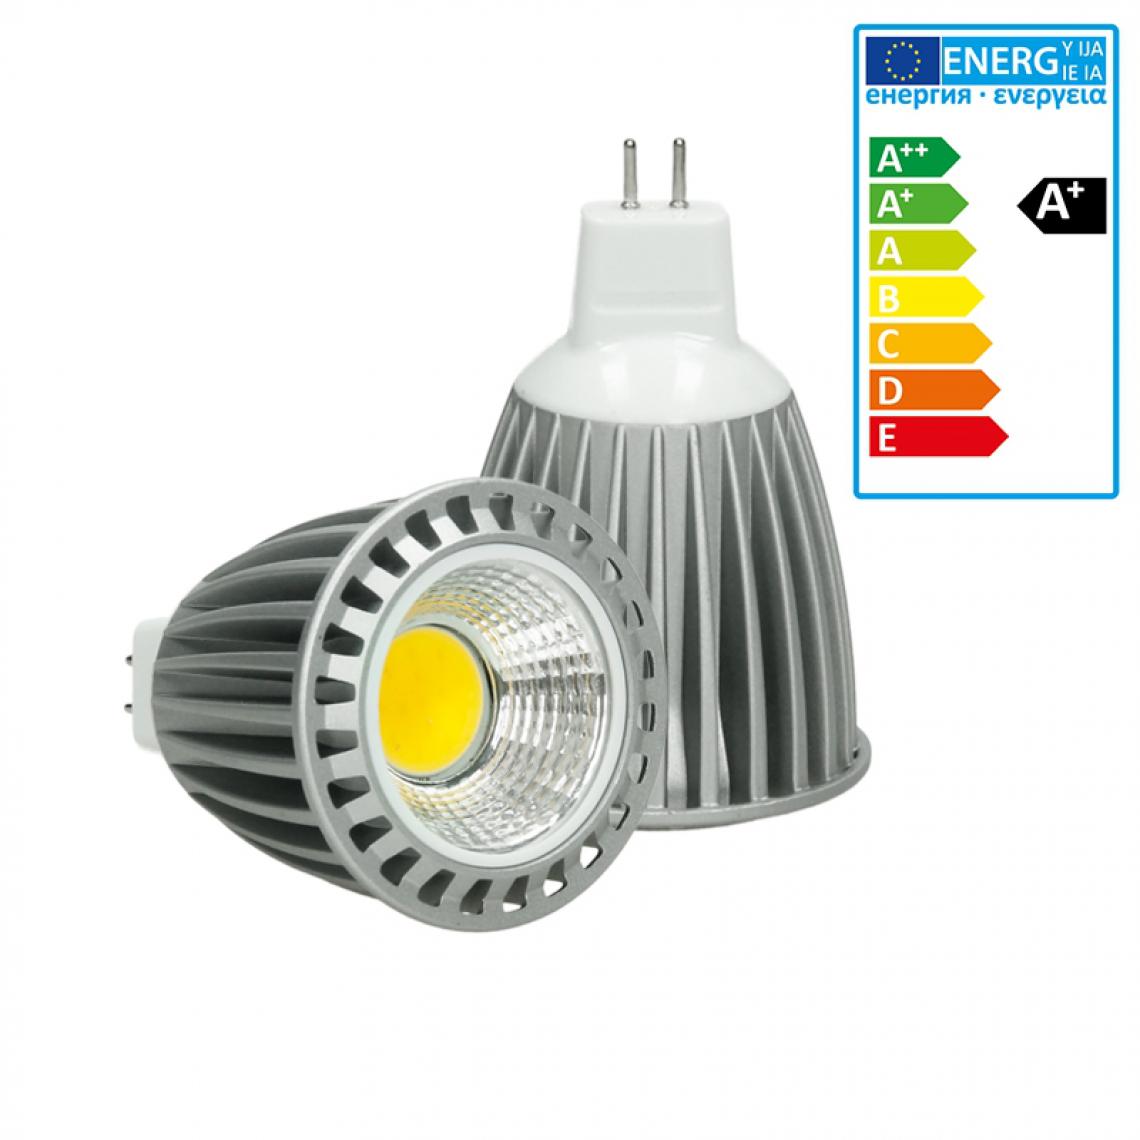 Ecd Germany - ECD Germany LED COB MR16 Spot Lampe Ampoule 9W blanc neutre - Ampoules LED